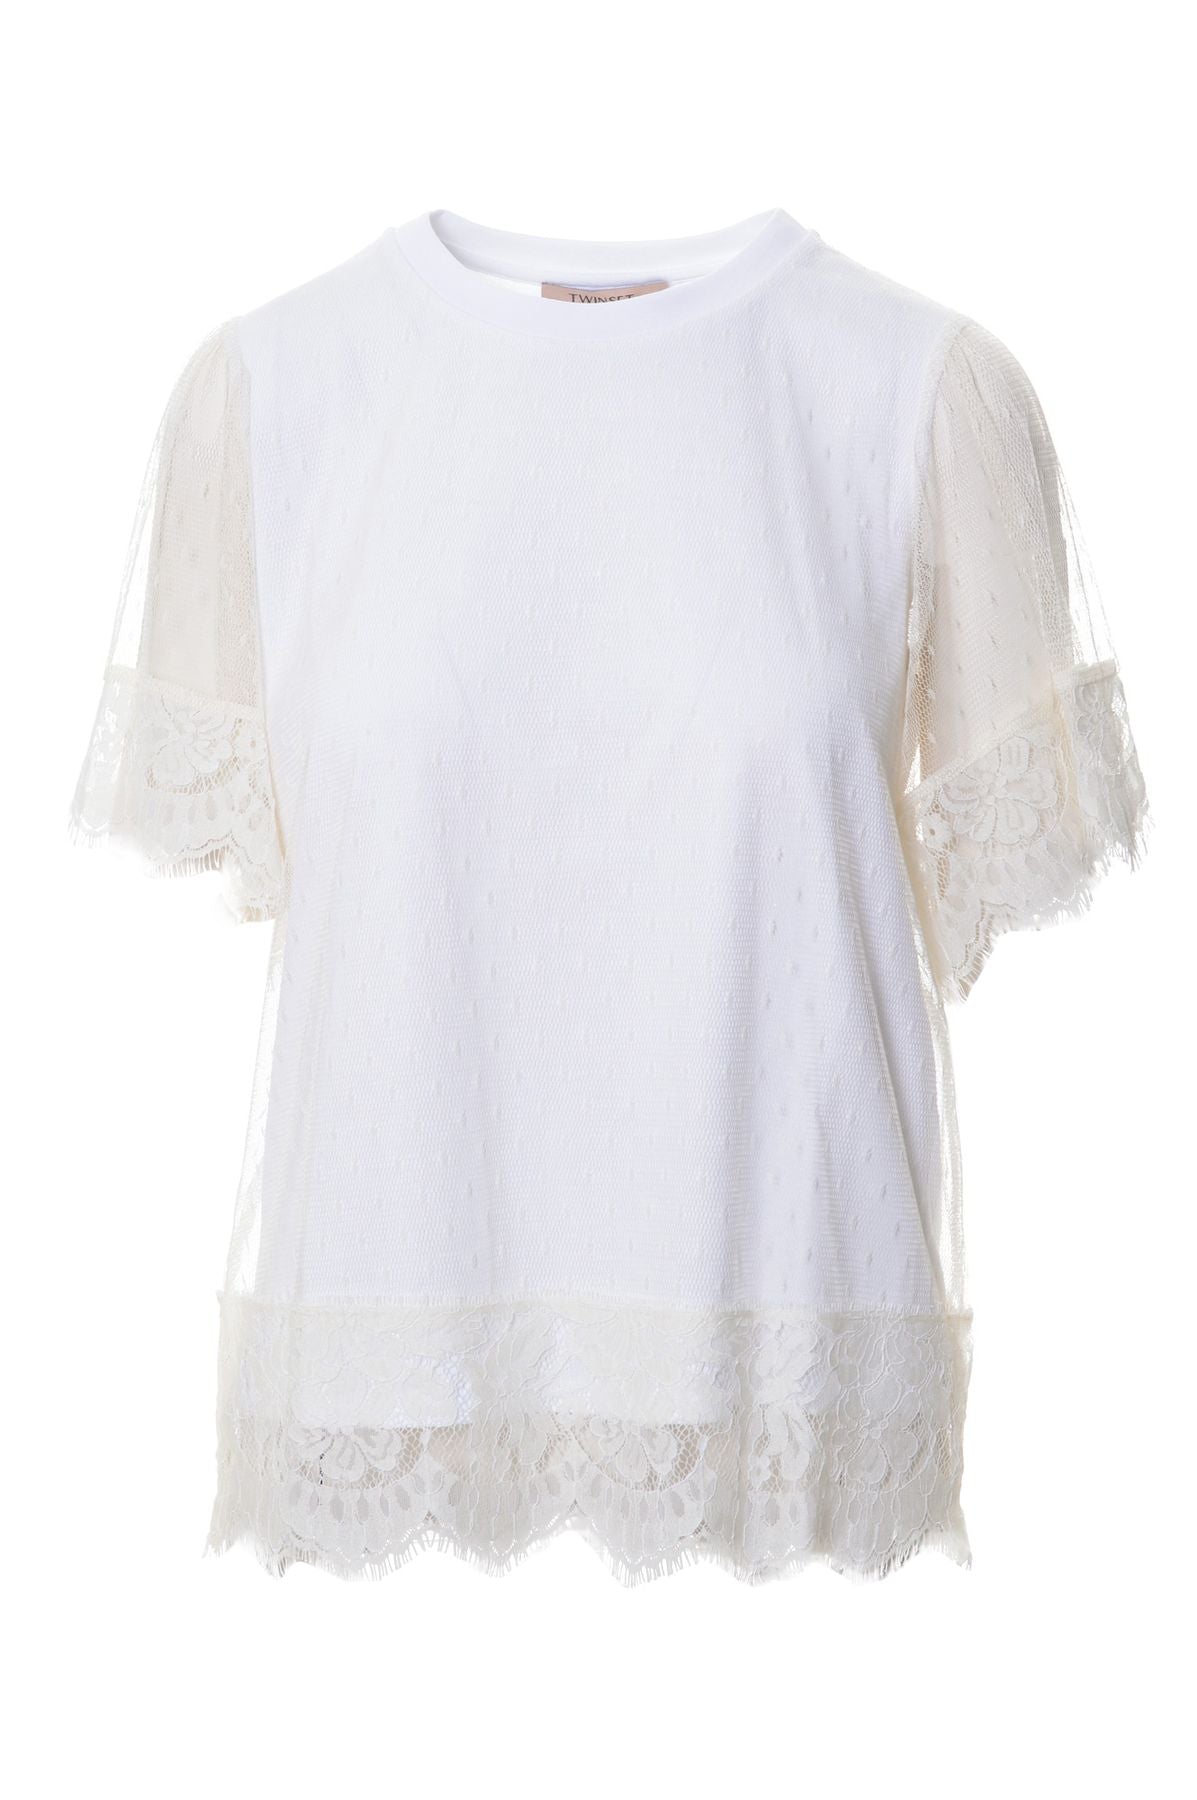 TWIN-SET Spring/Summer Cotton T-shirt